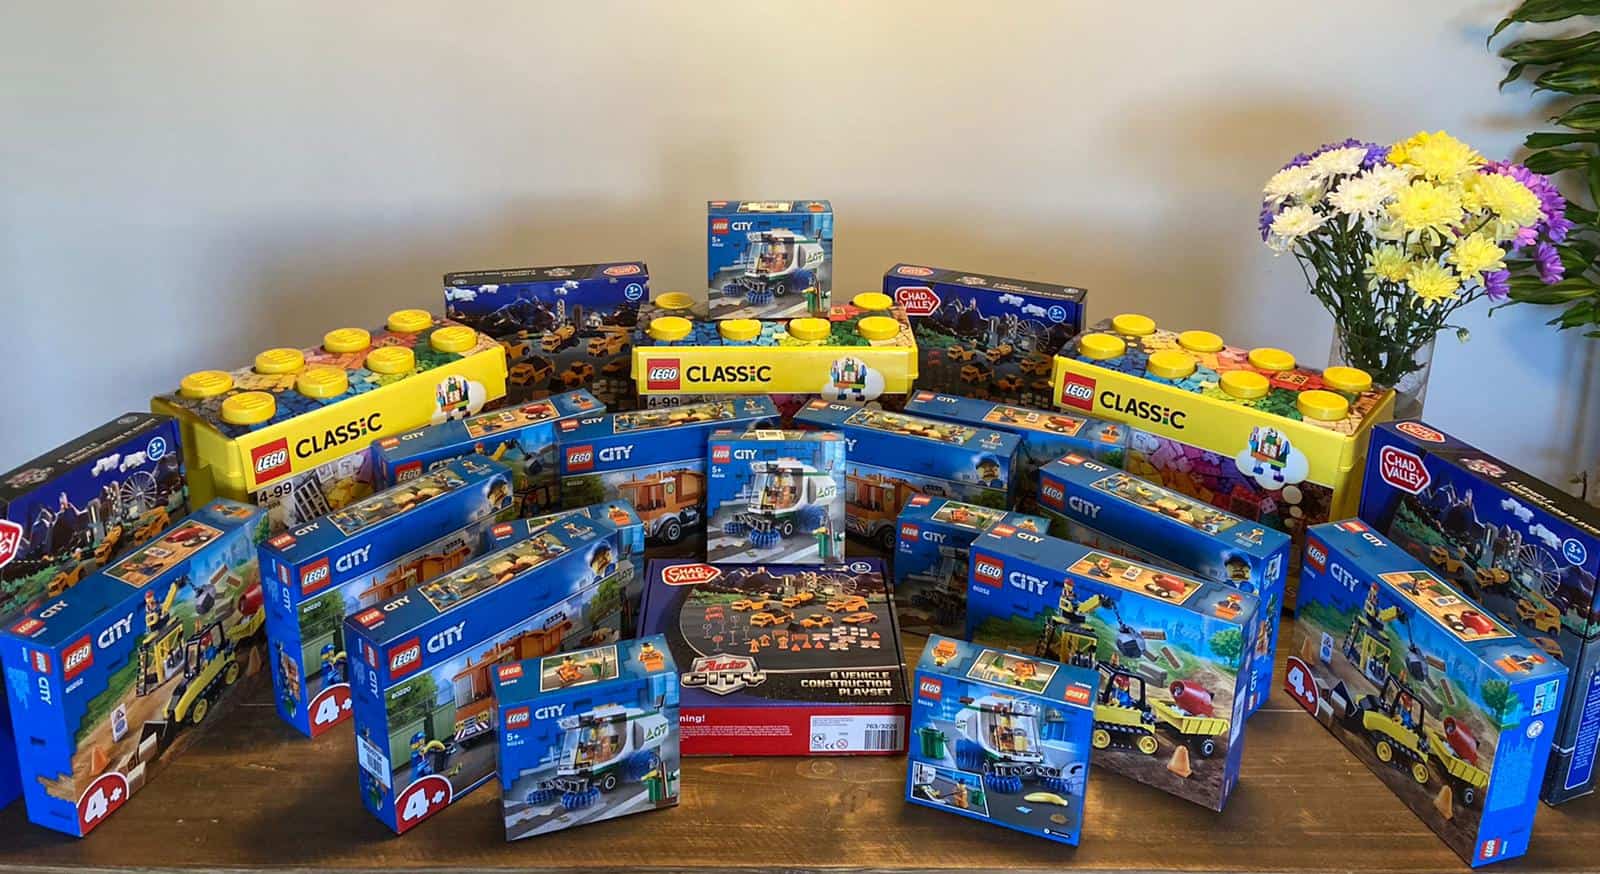 Lego Donation for the Disney and Paddington Children's Ward